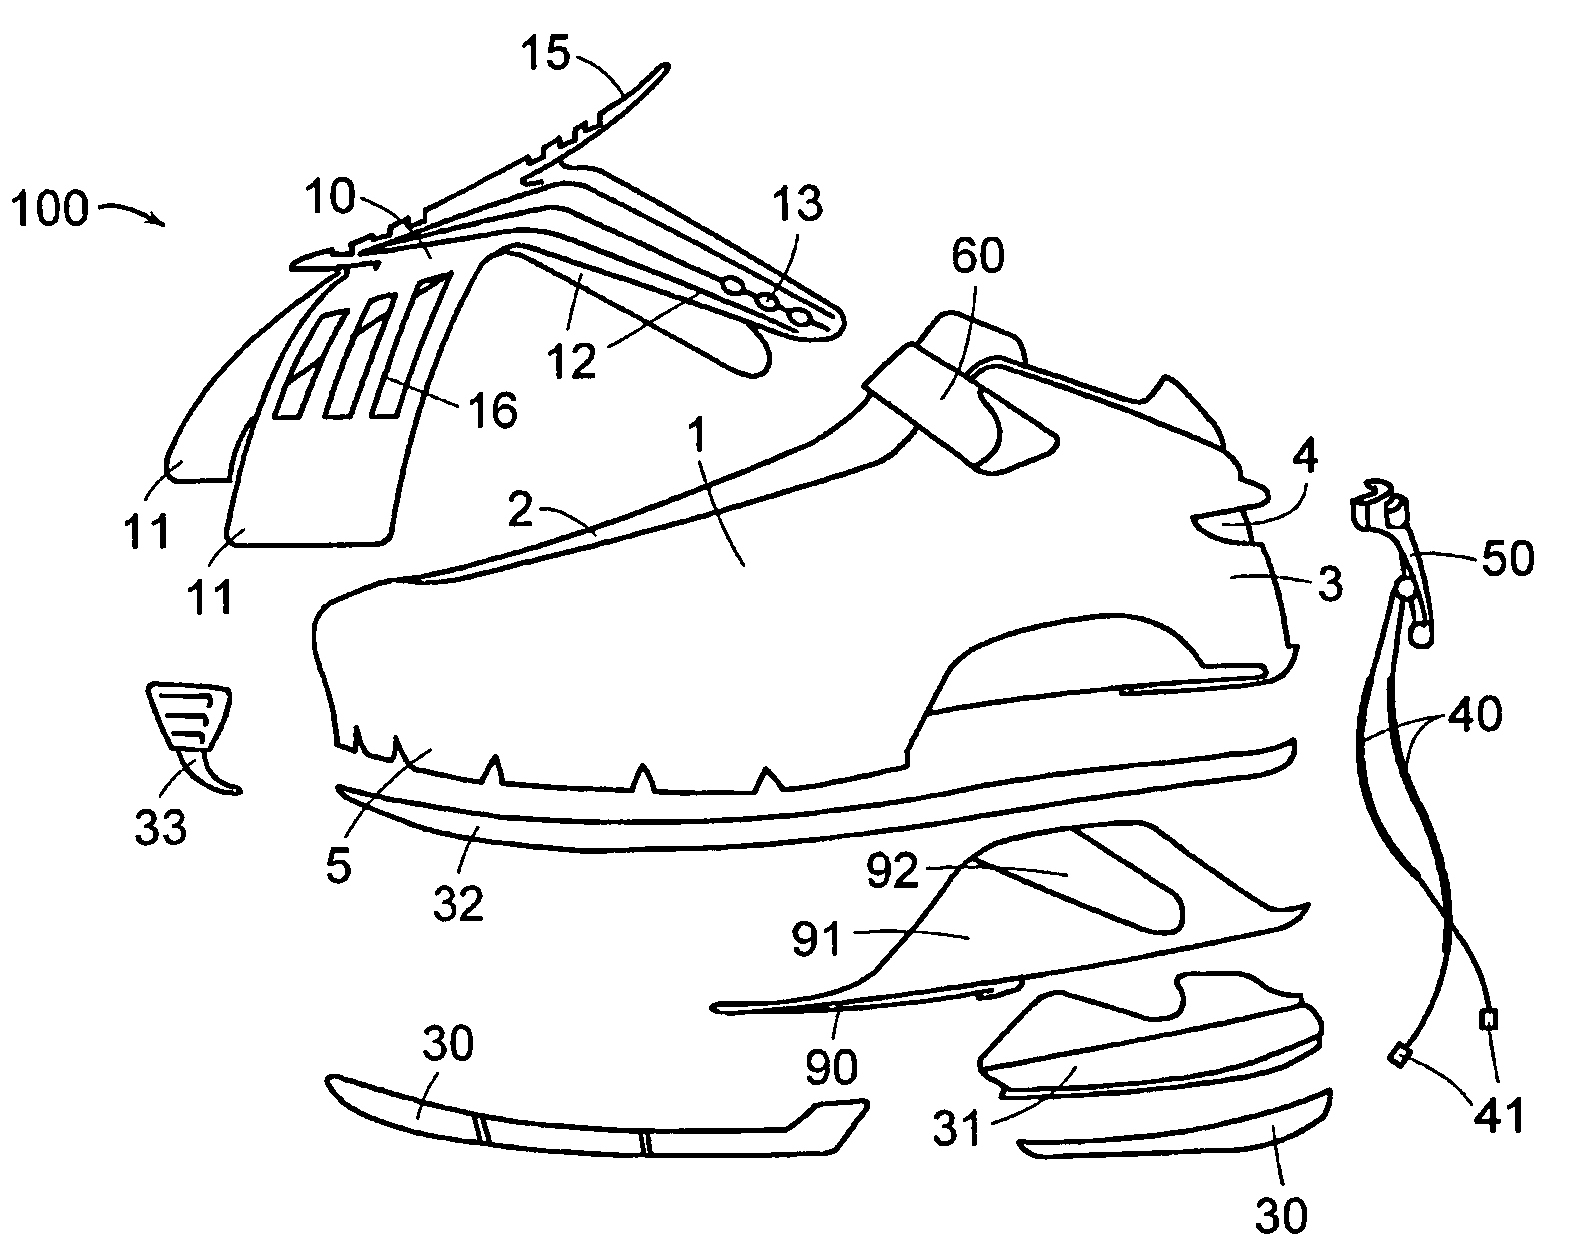 Shoe closure system